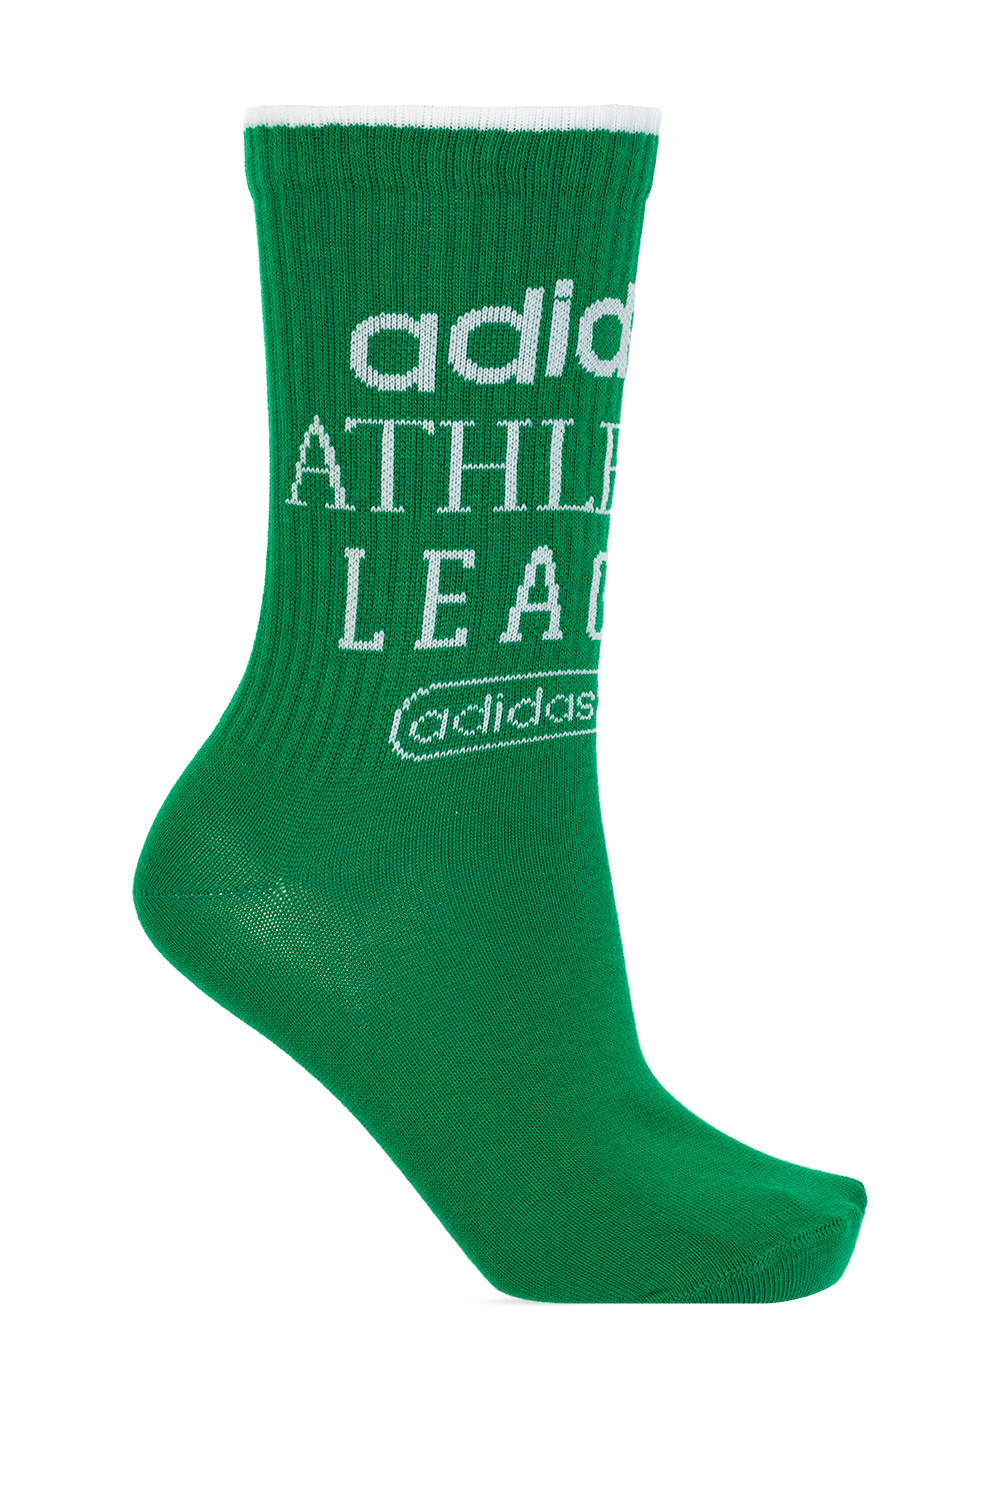 ADIDAS Originals Socks two-pack